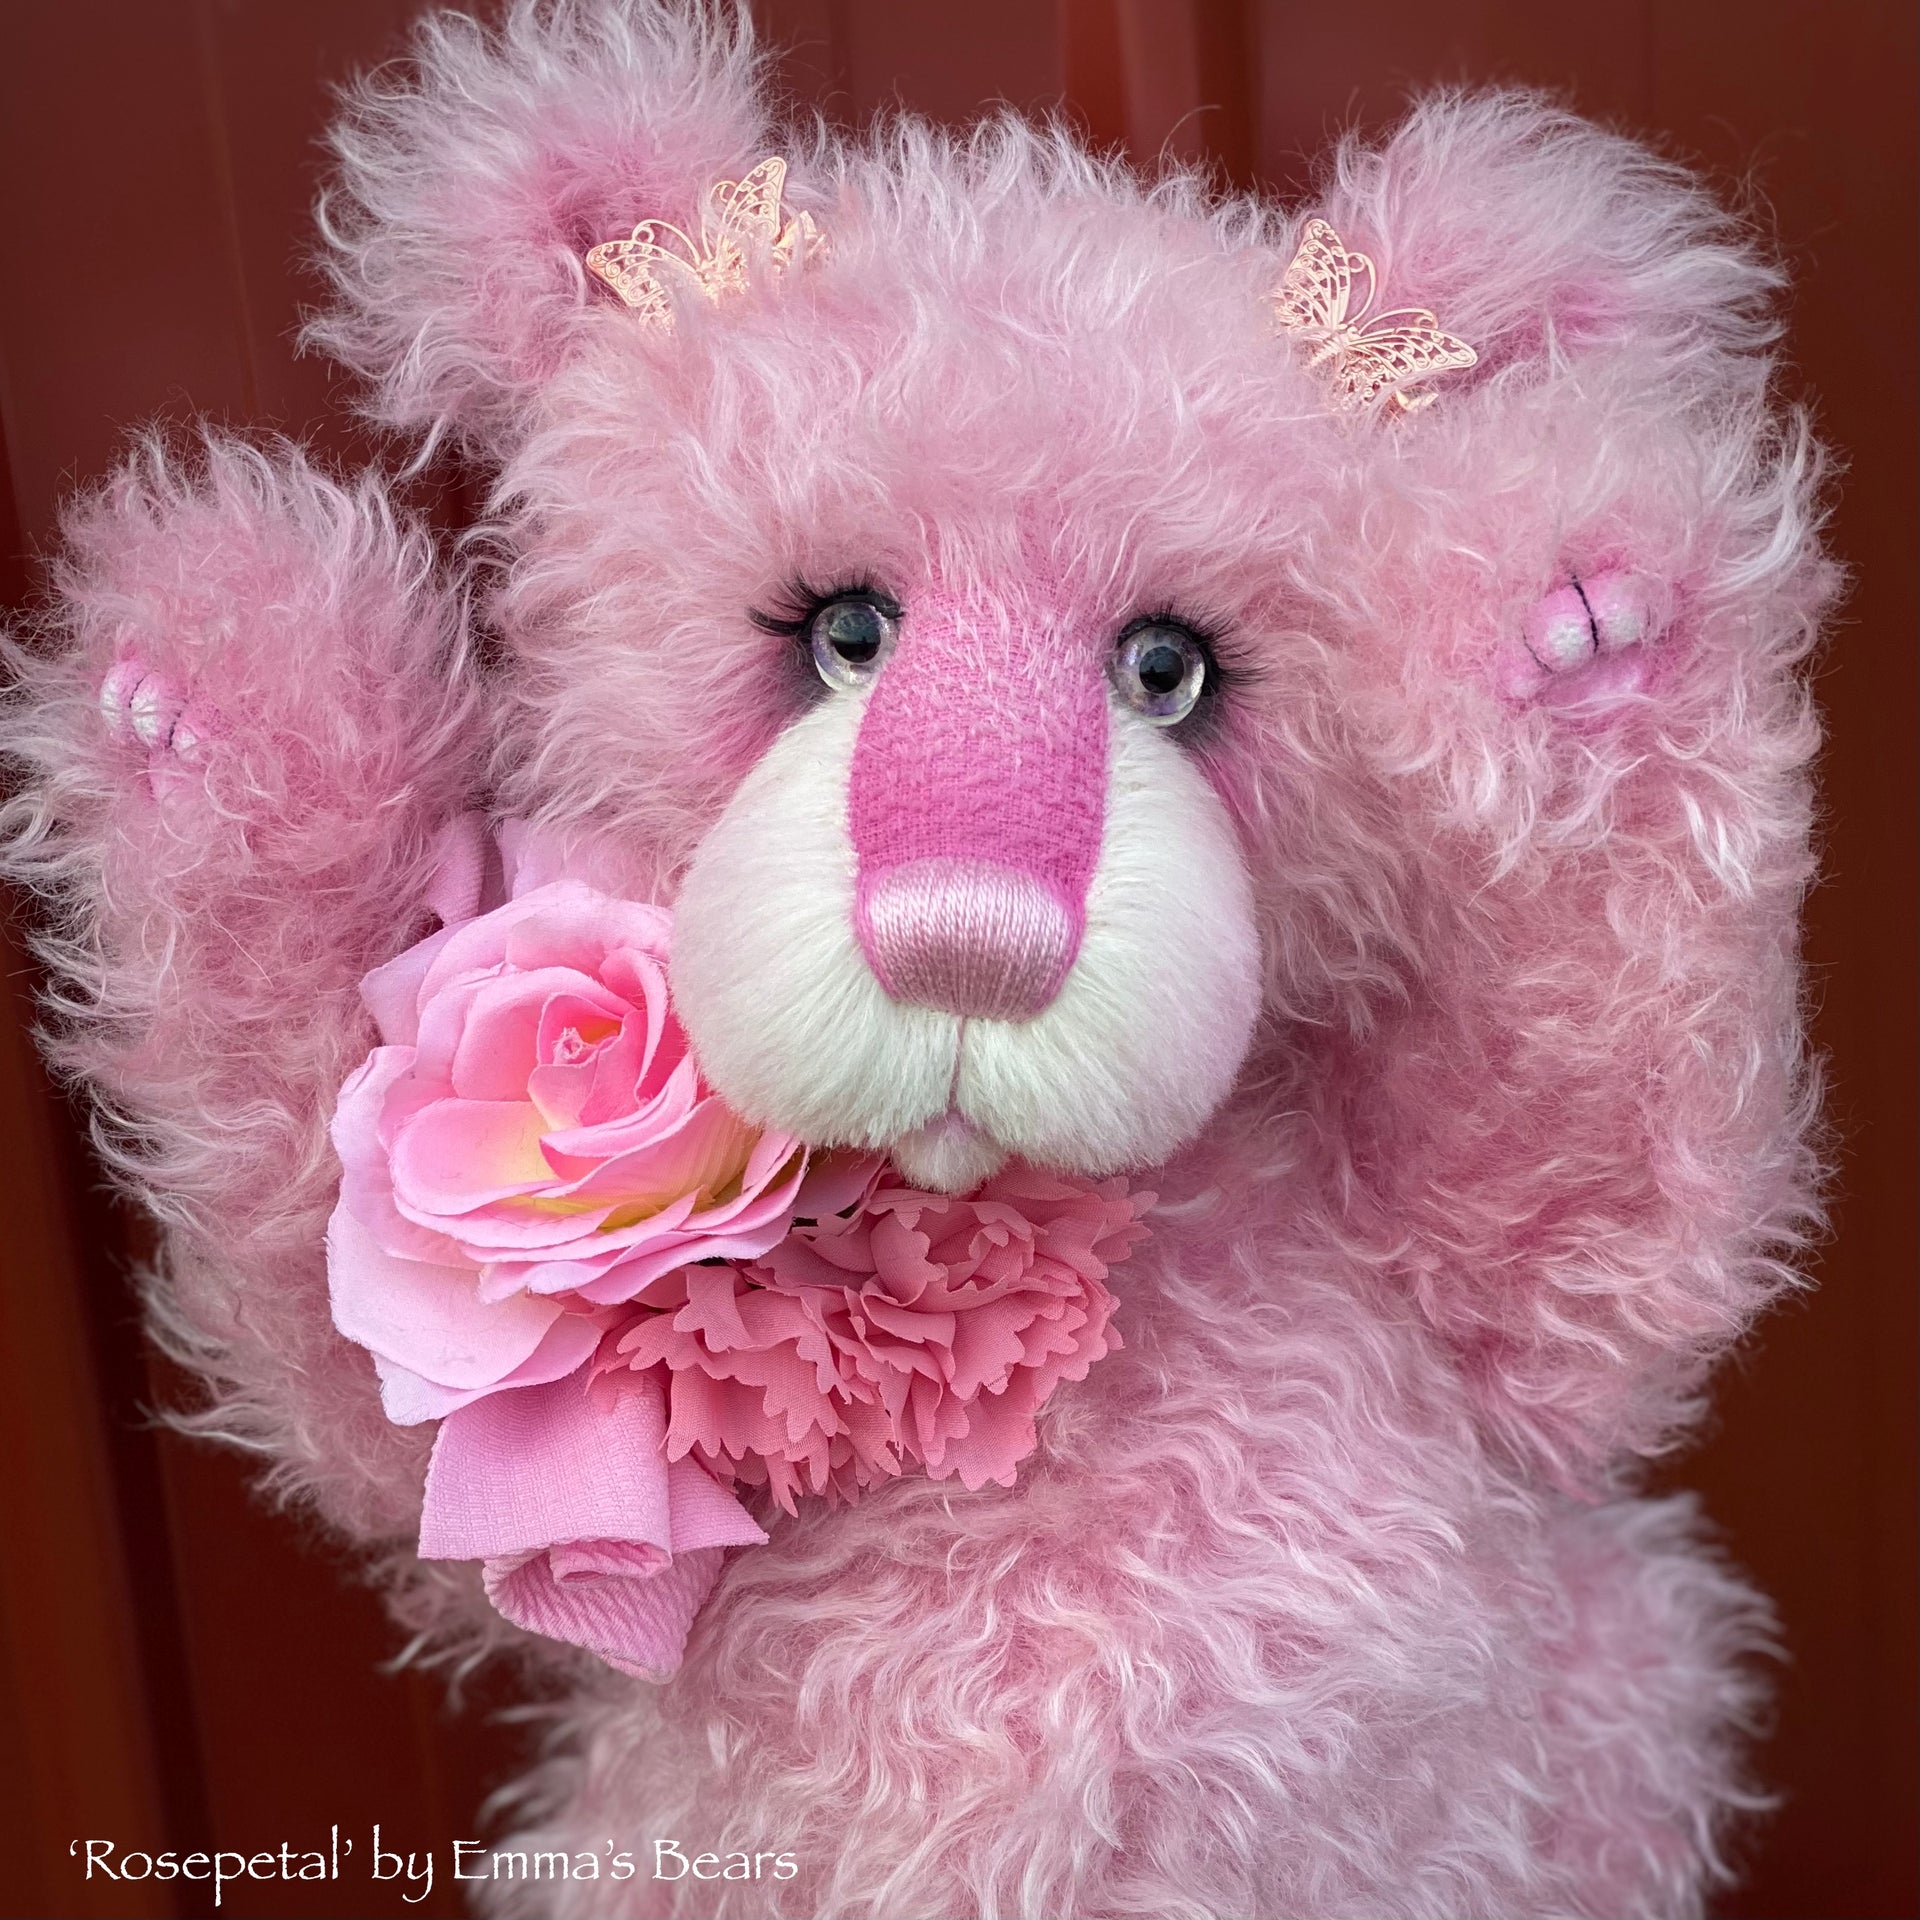 Rosepetal - 17" hand-dyed mohair bear by Emmas Bears - OOAK